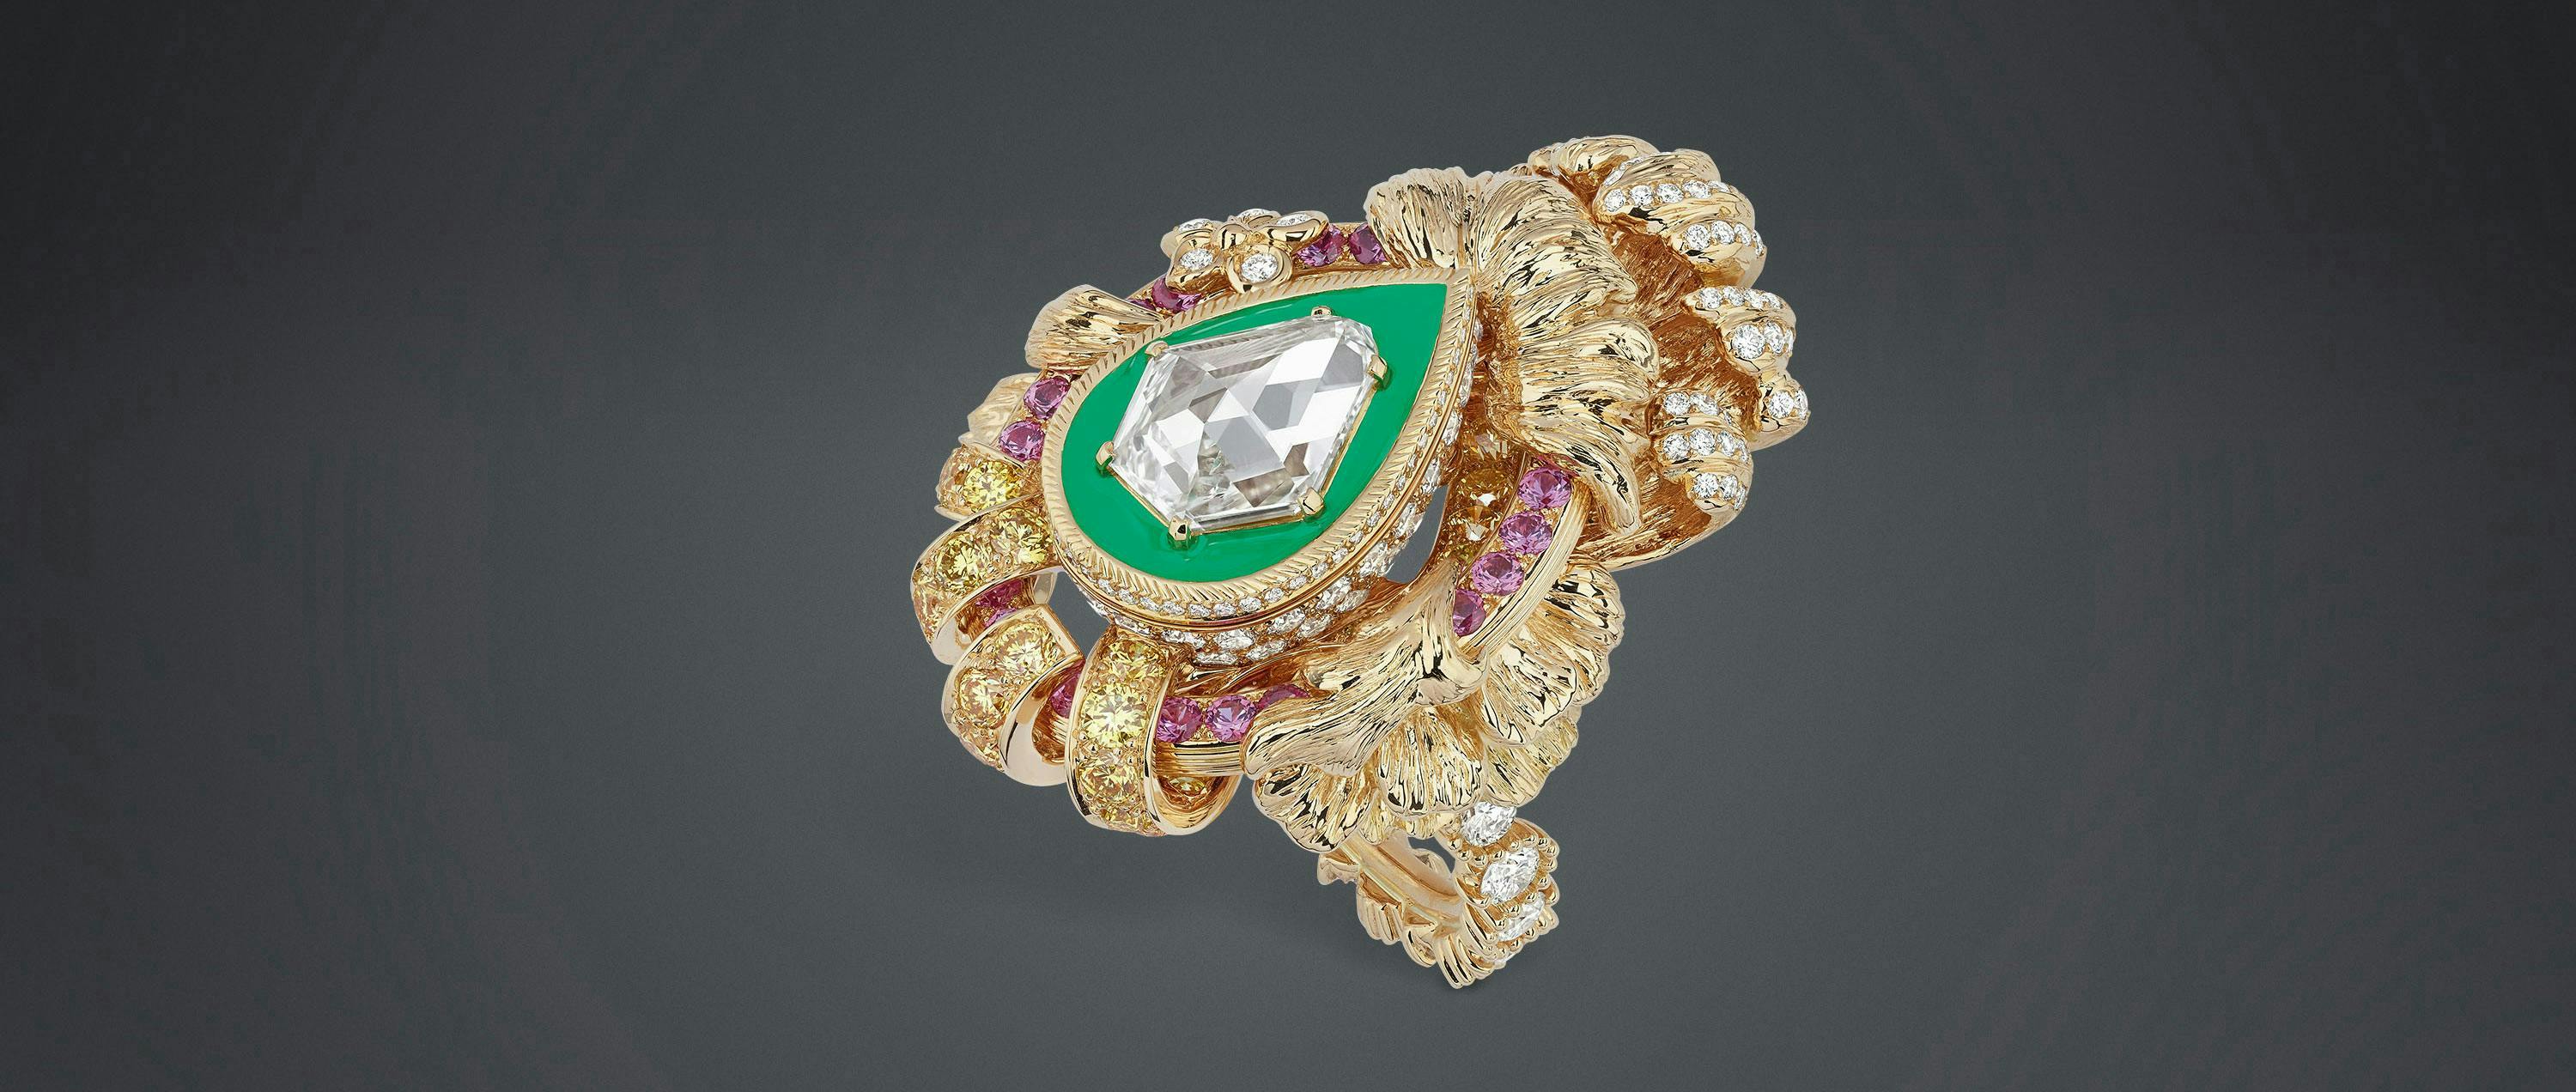 accessories accessory jewelry brooch diamond gemstone